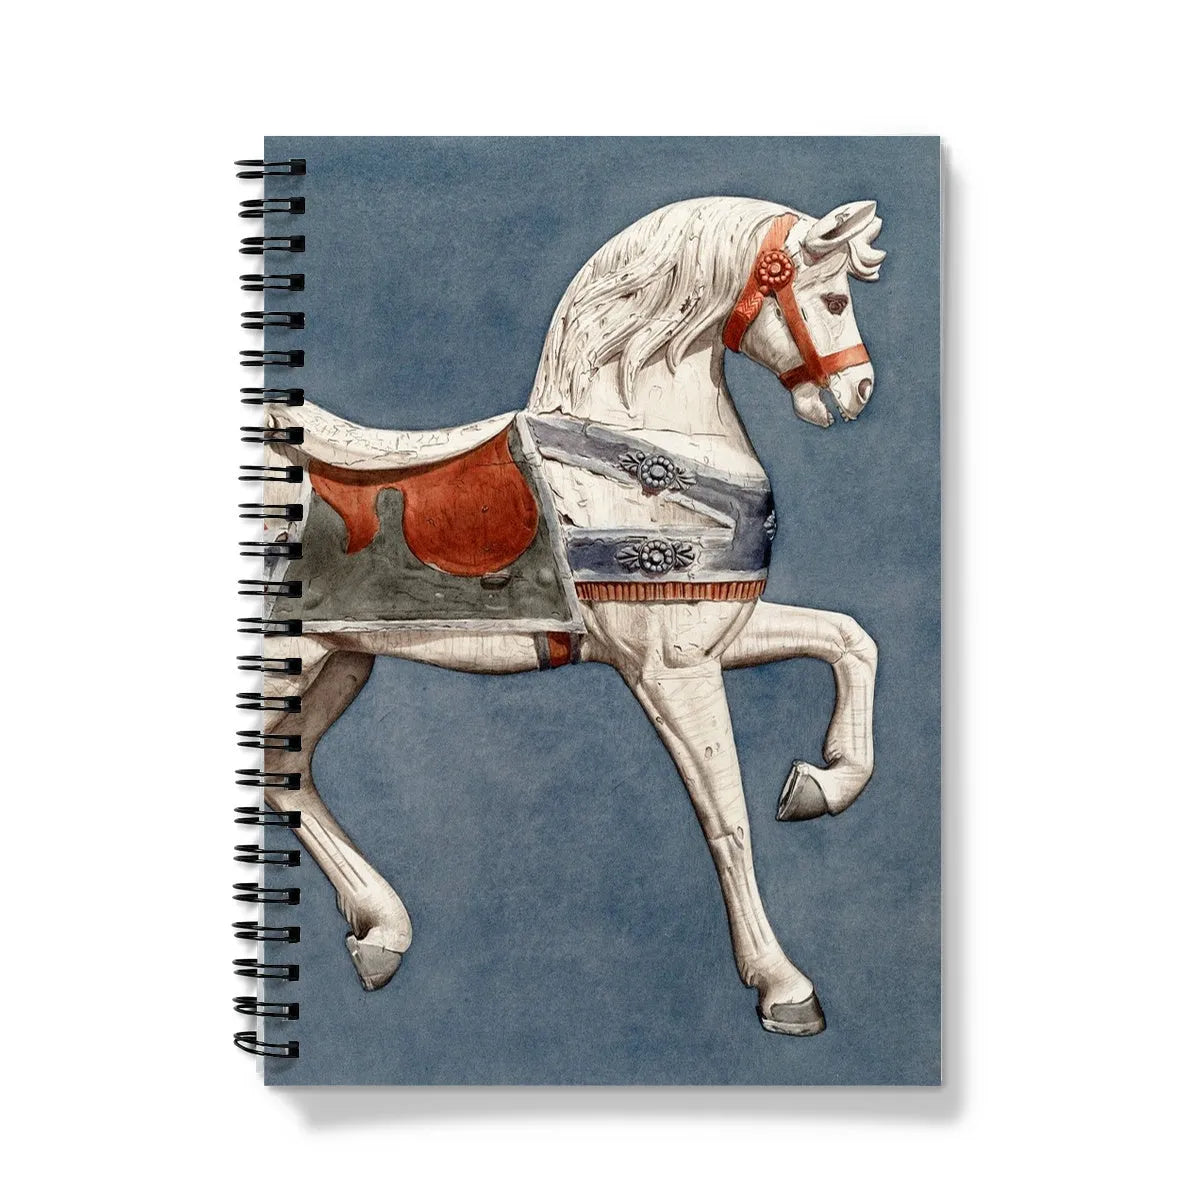 Carousel Horse By Henry Murphy Notebook - A5 / Graph - Notebooks & Notepads - Aesthetic Art